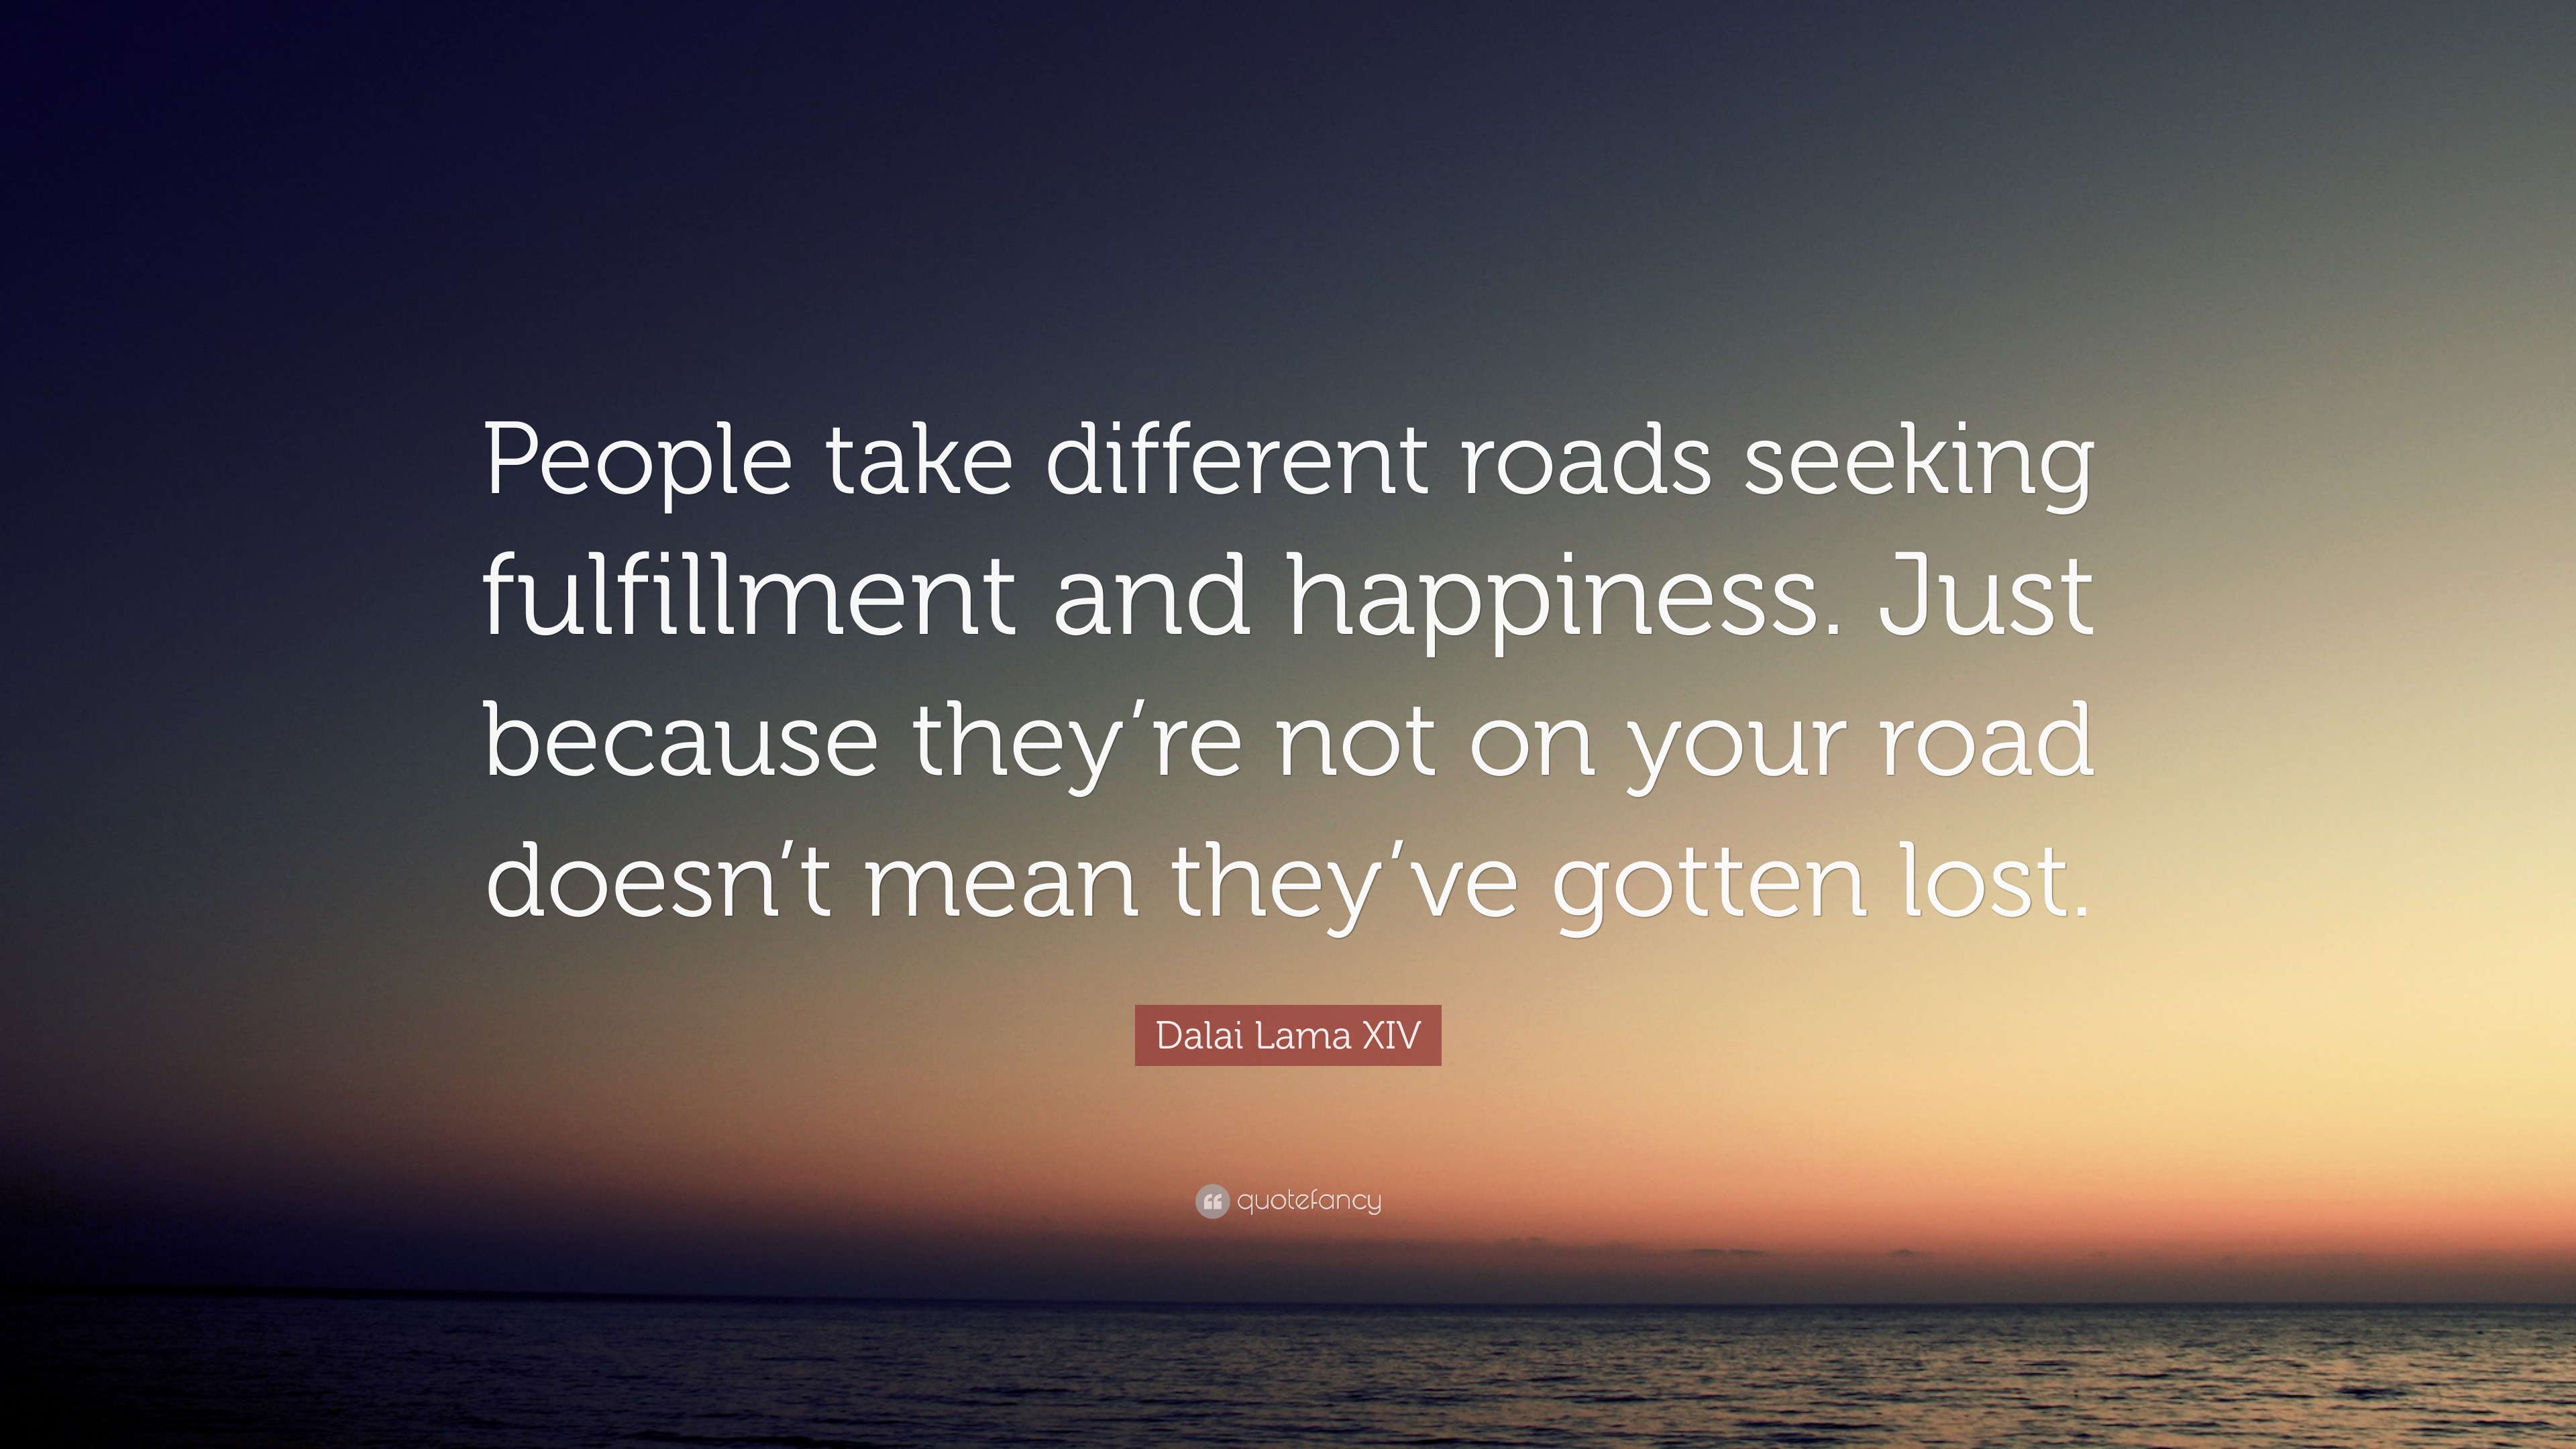 Dalai Lama XIV Quote: “People take different roads seeking fulfillment ...